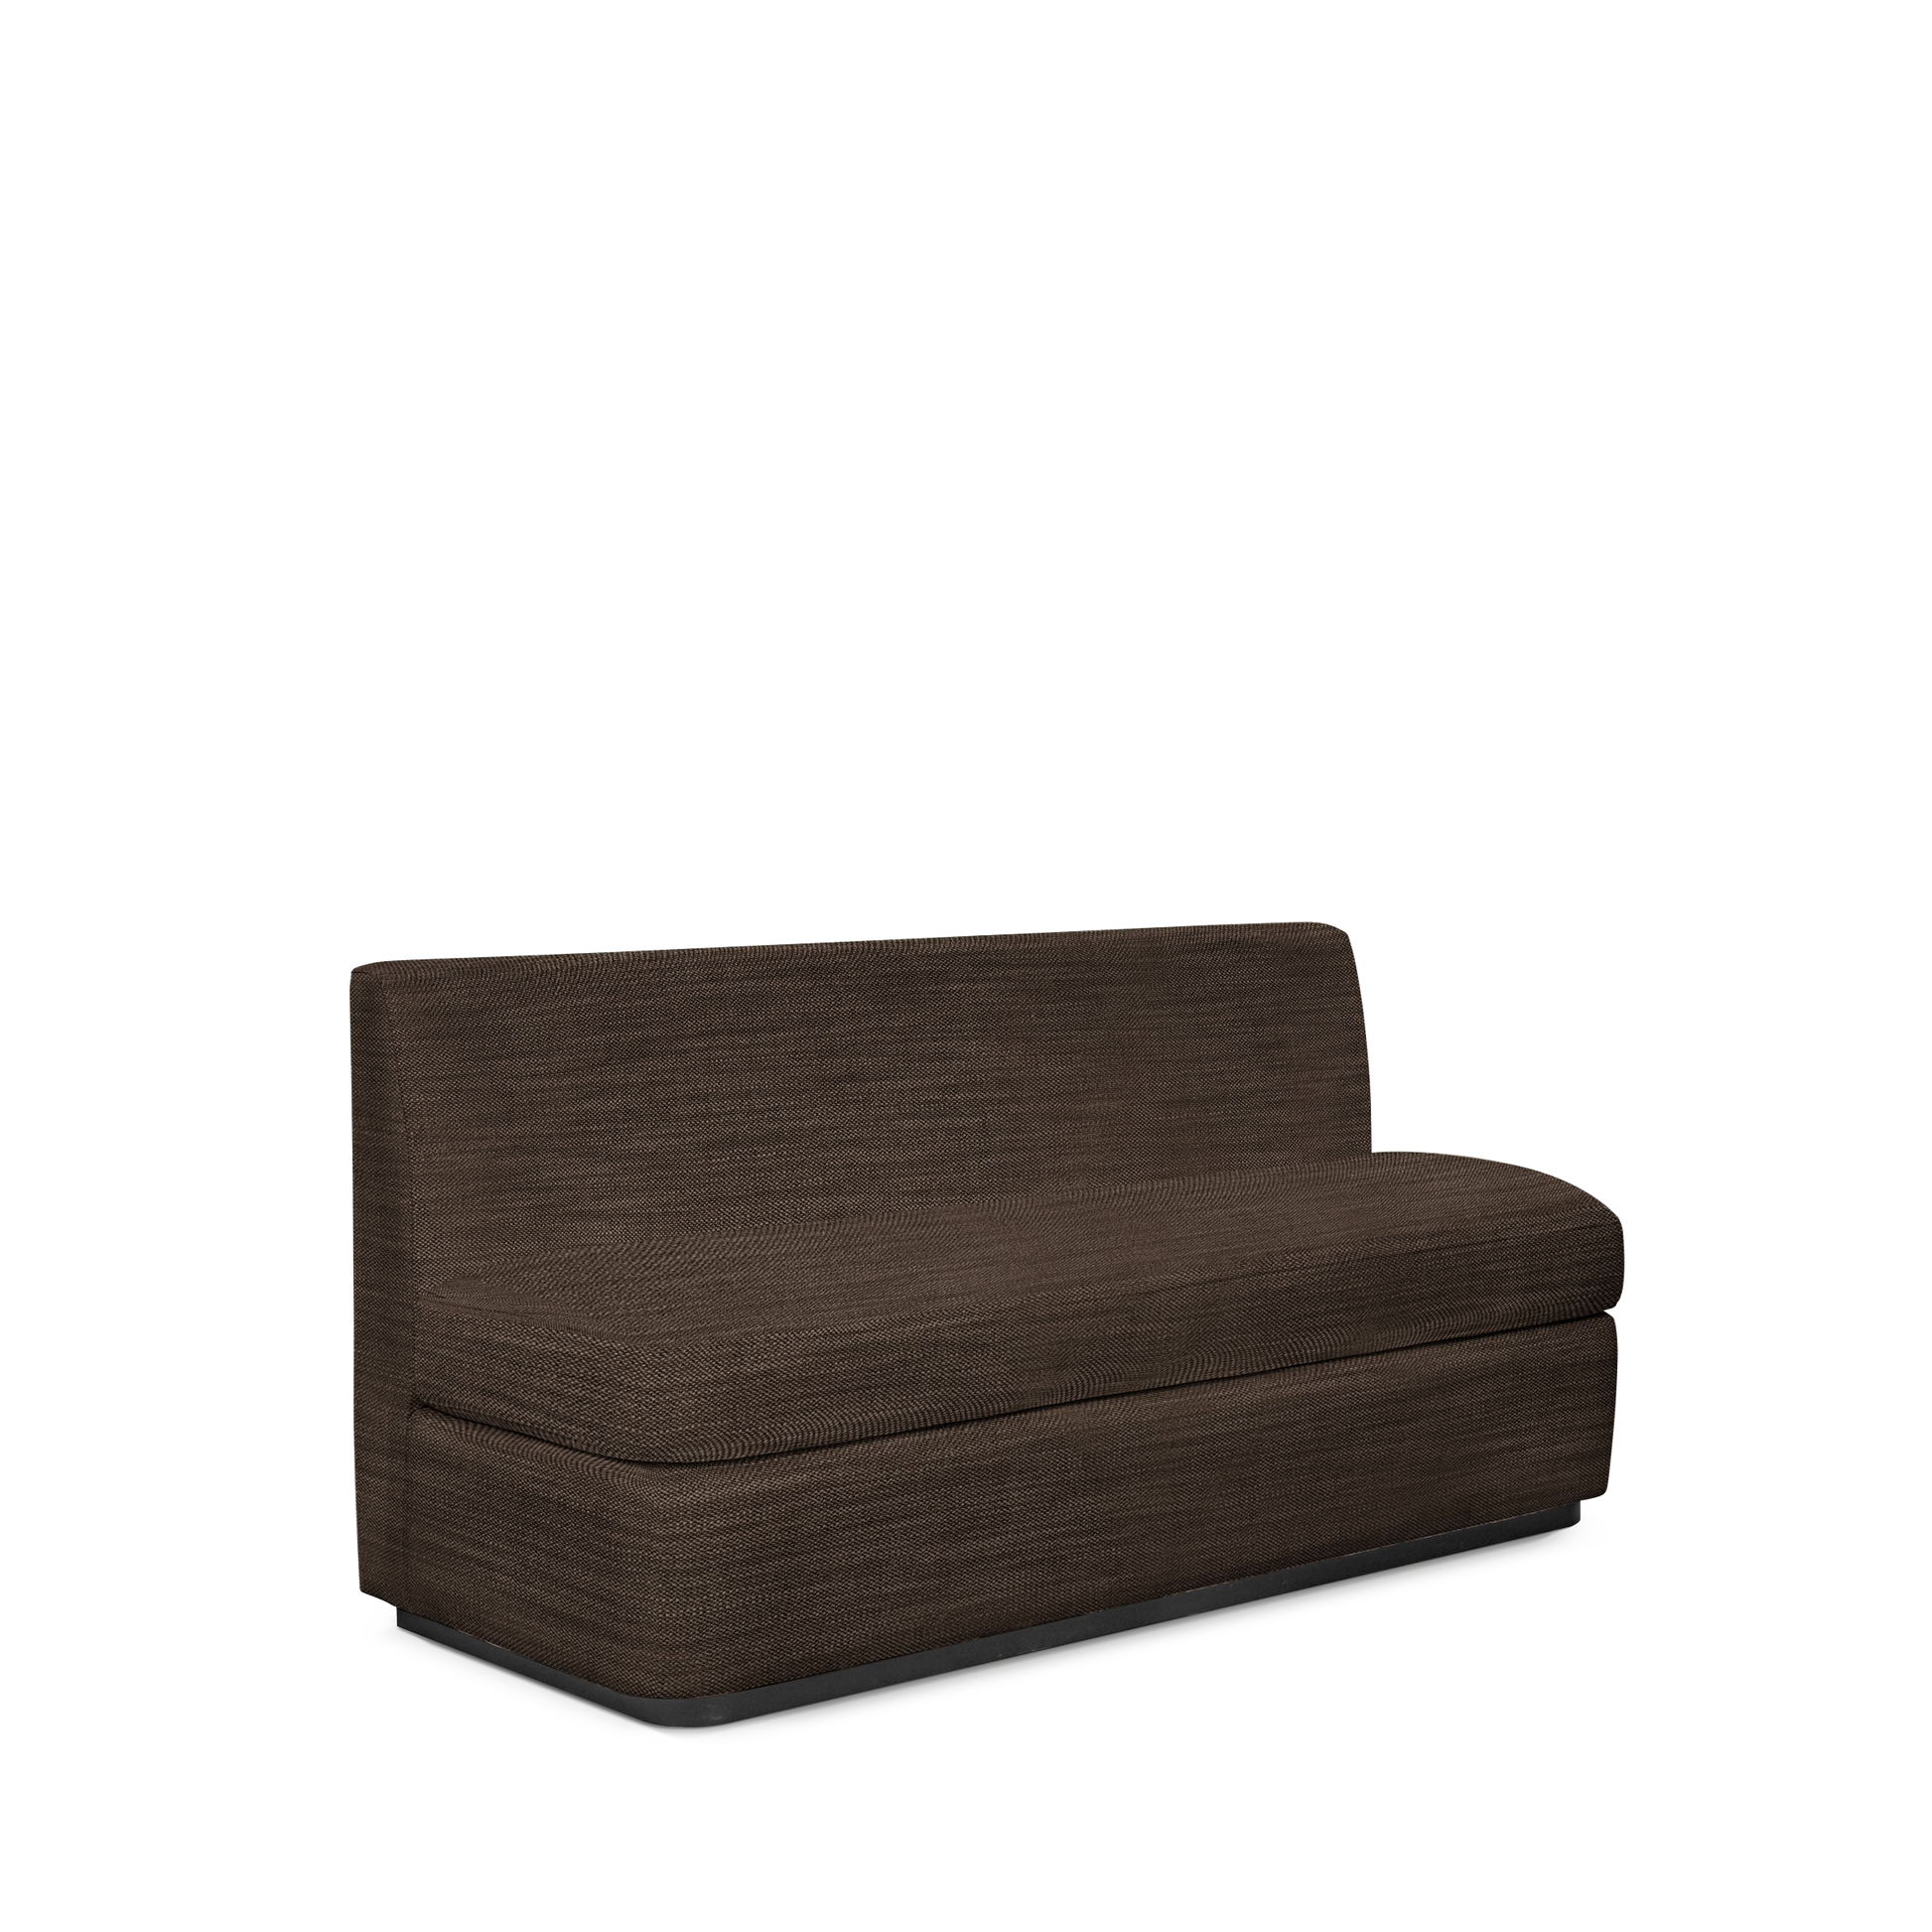  CALMA KITCHEN 3-seater sofa with rocco brown textile